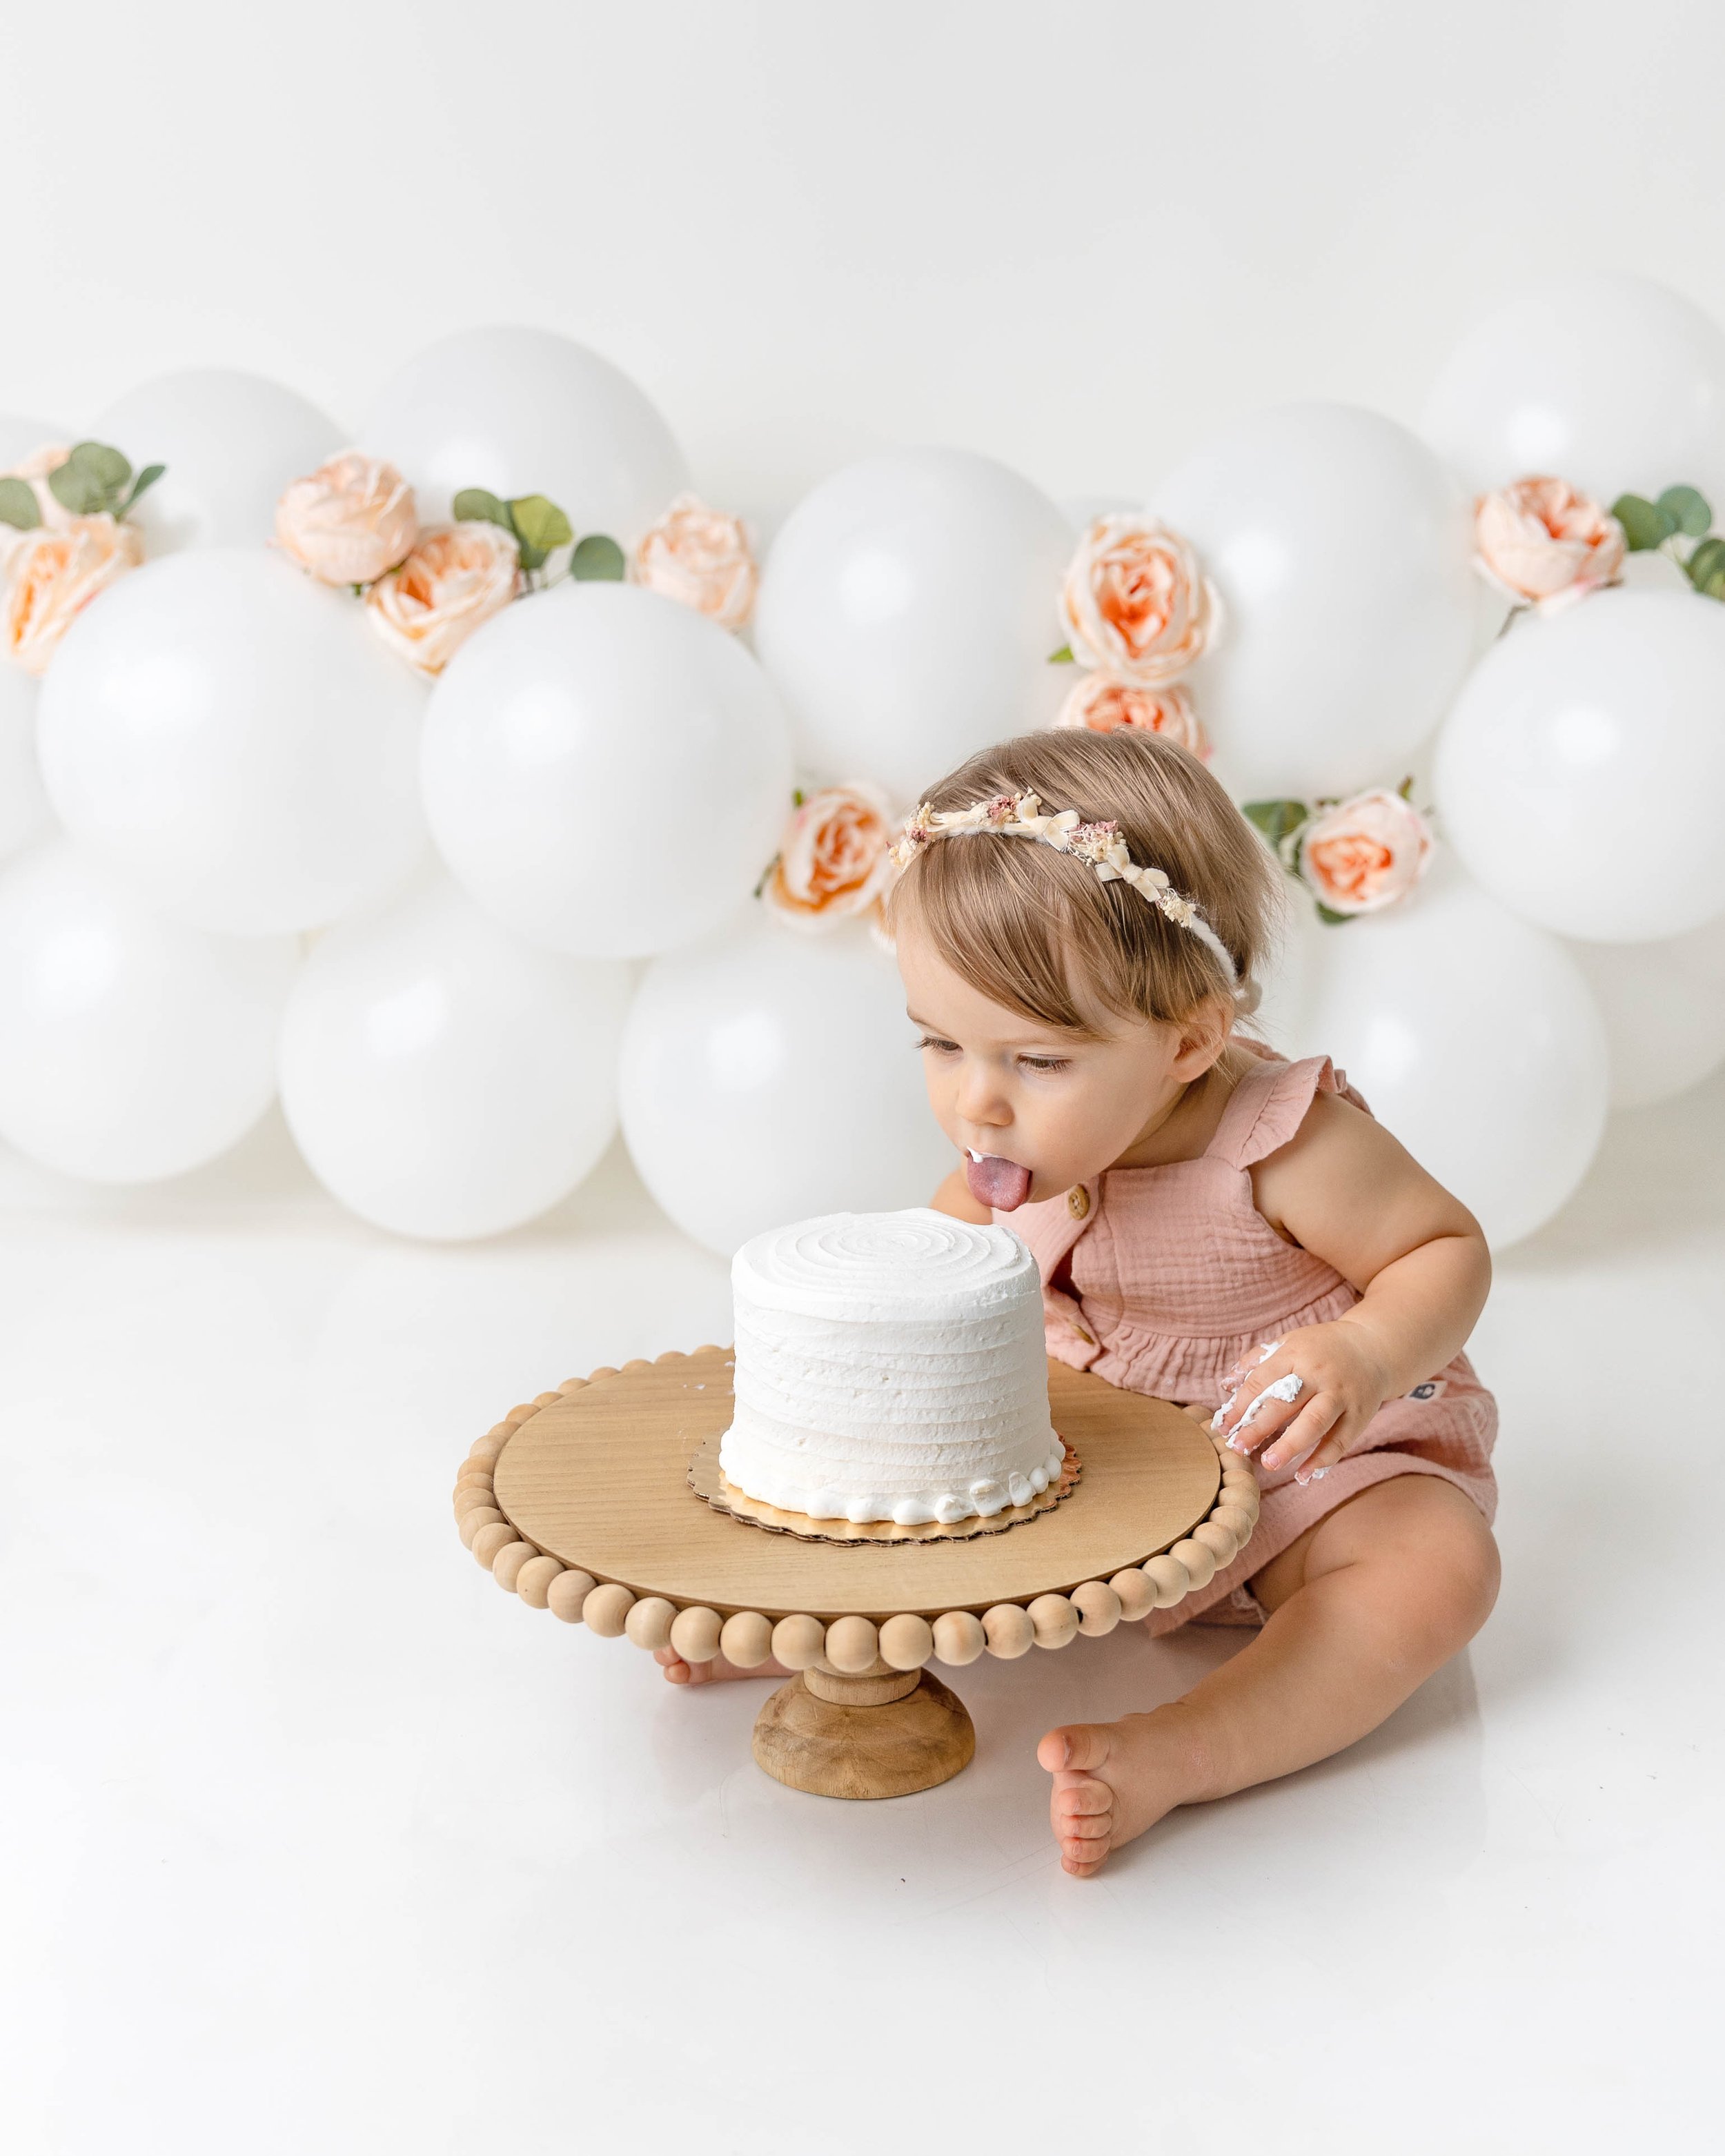 cake-smash-photos-first-birthday-images-newborn-photography-spokane-washington-6.jpg